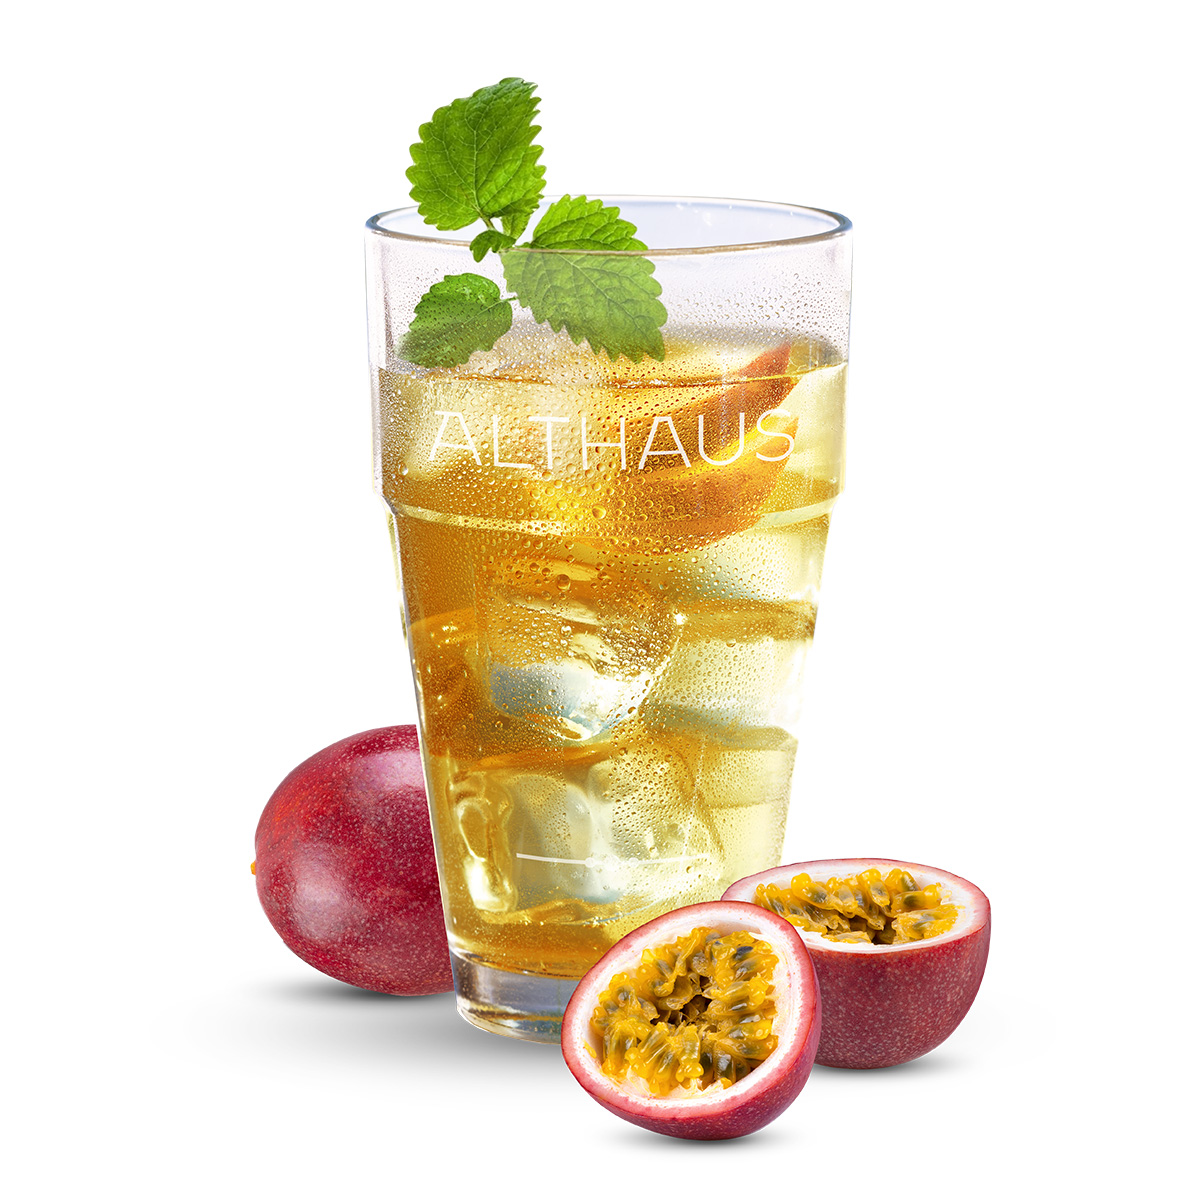 Iced Tea Passionfruit & Mango